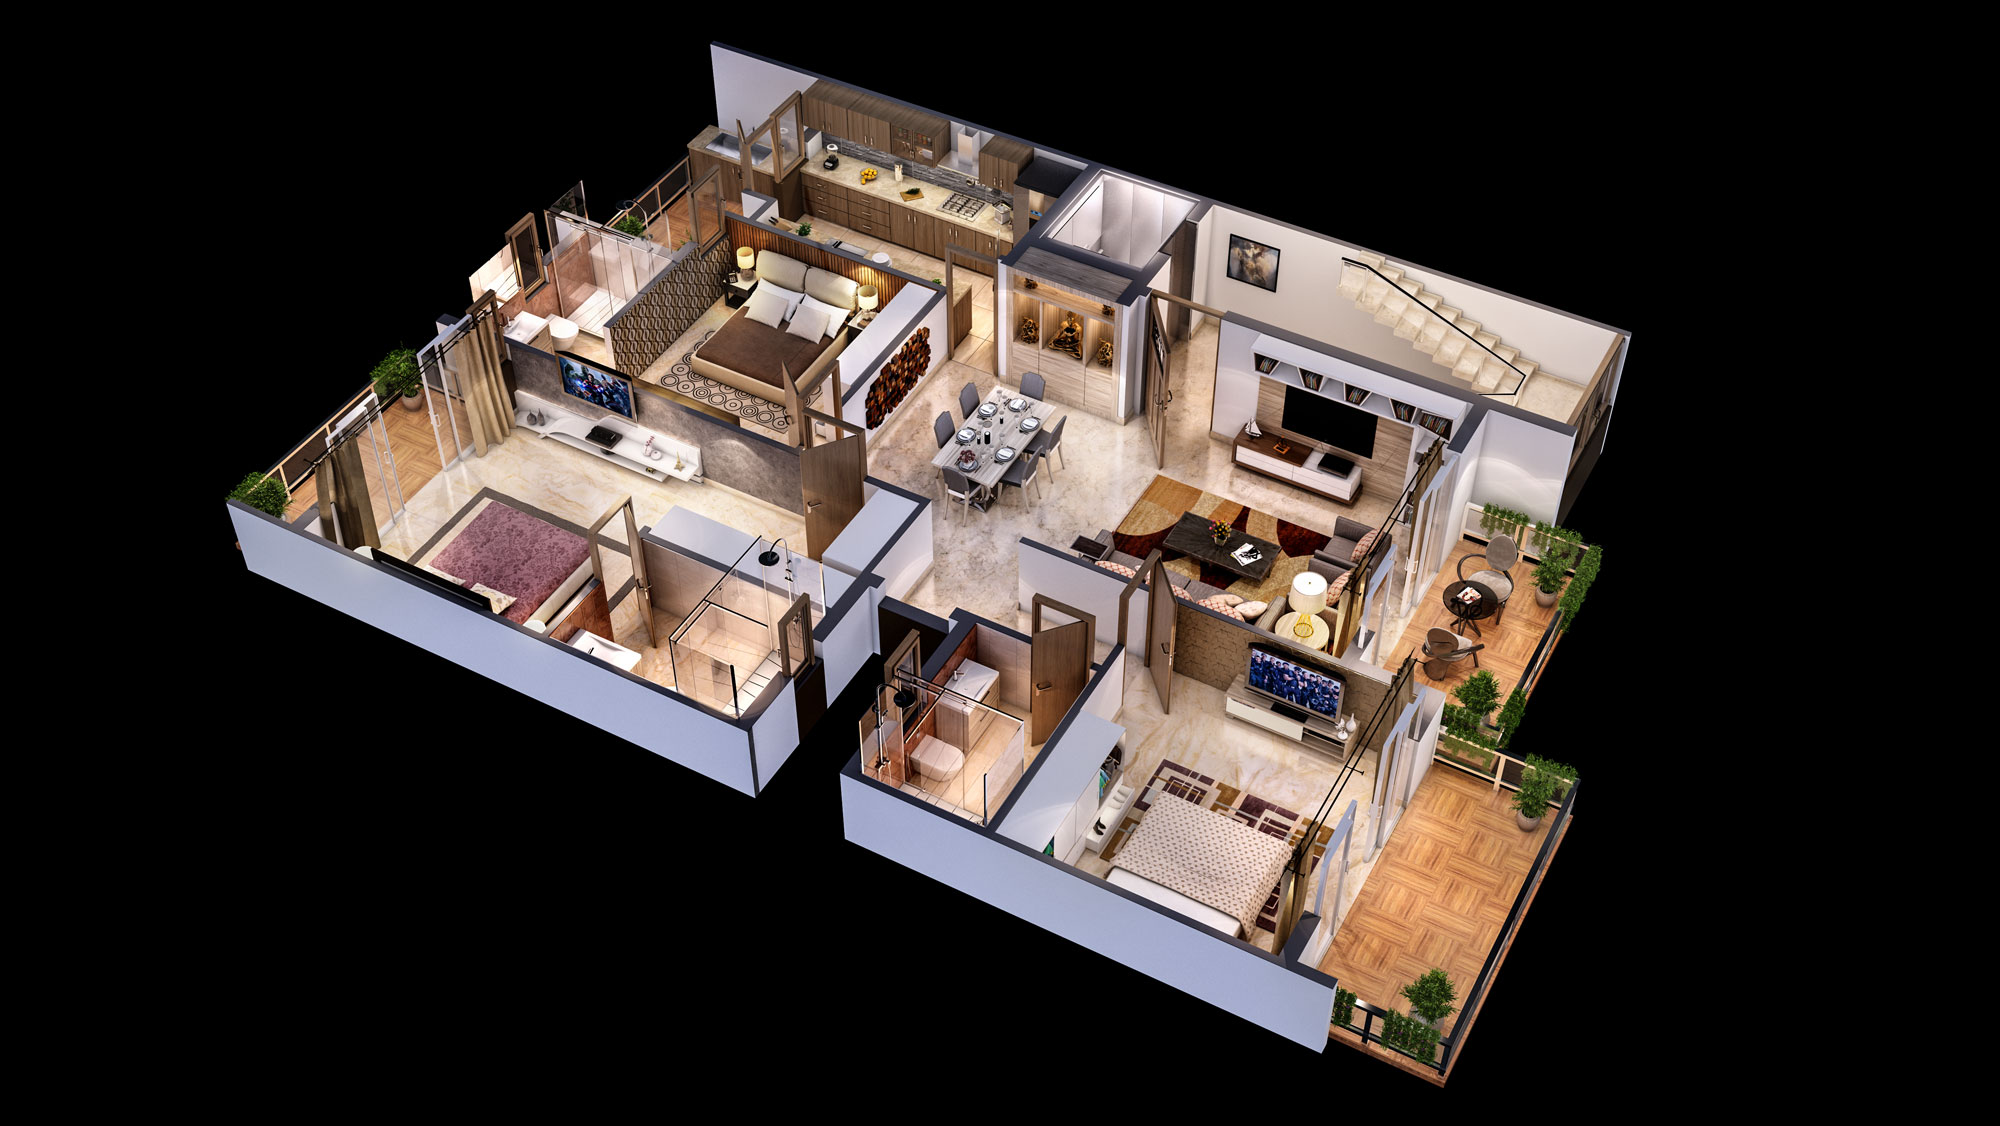 3d floor plan rendering for Adani Samsara gurgaon. photo realistic rendering